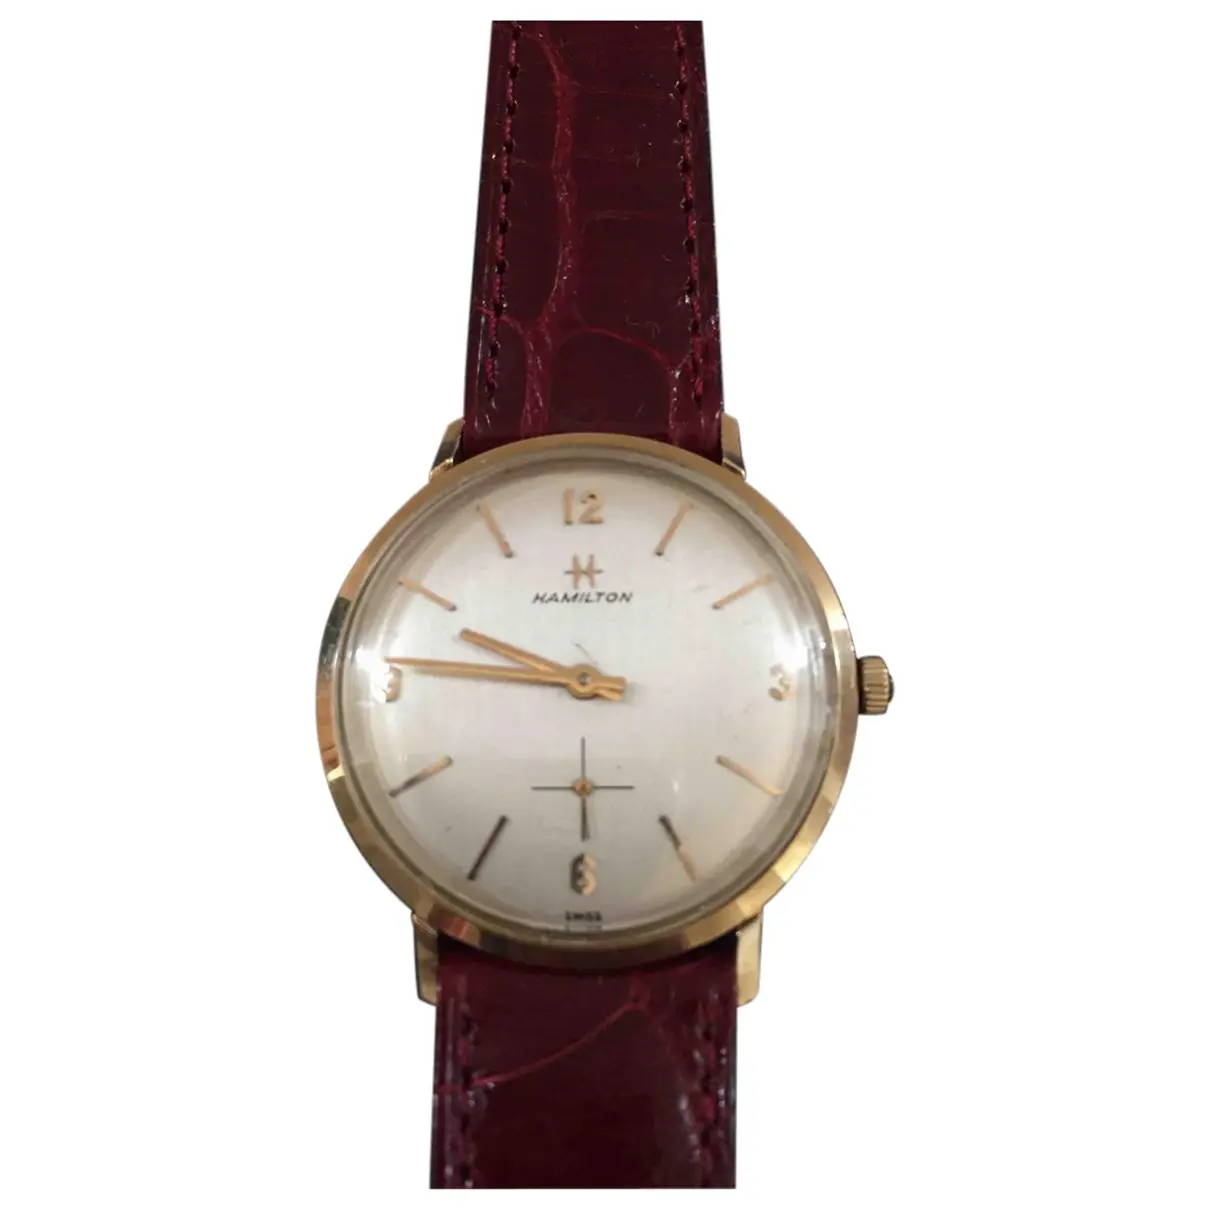 Gold Gold Watch Hamilton - Vintage